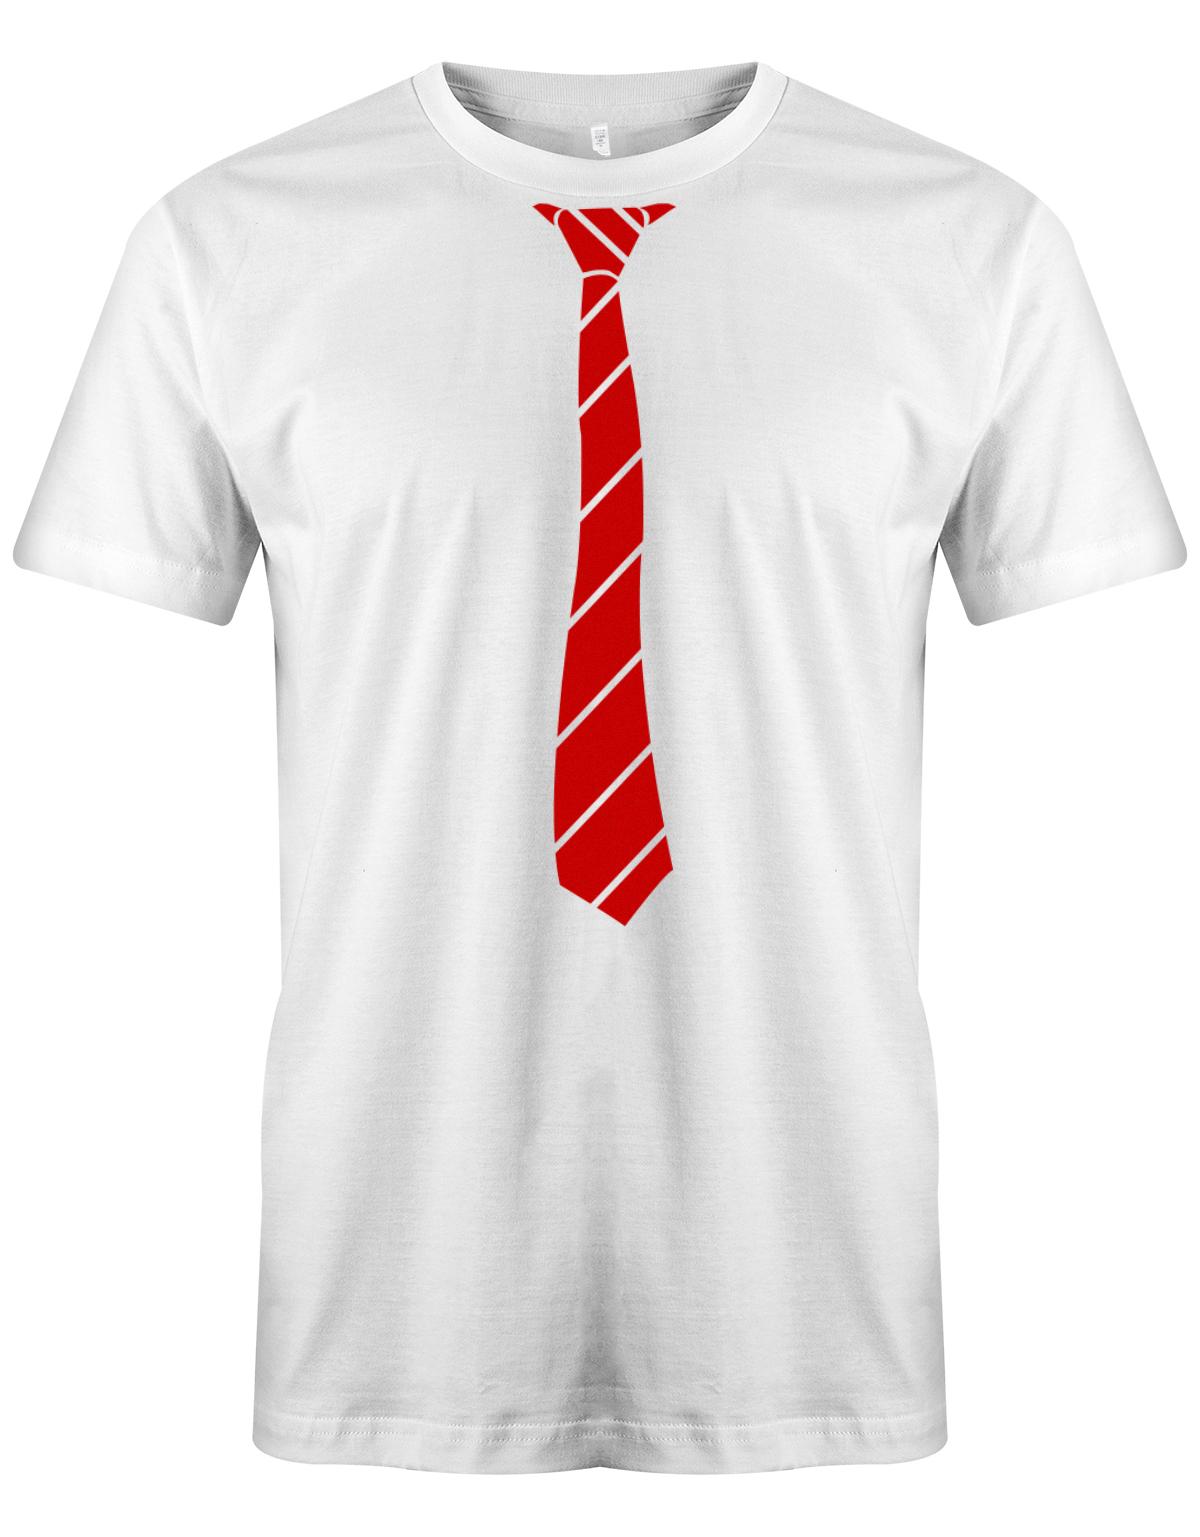 Krawatte-buisness-Herren-Shirt-JGA-Weiss-Rot